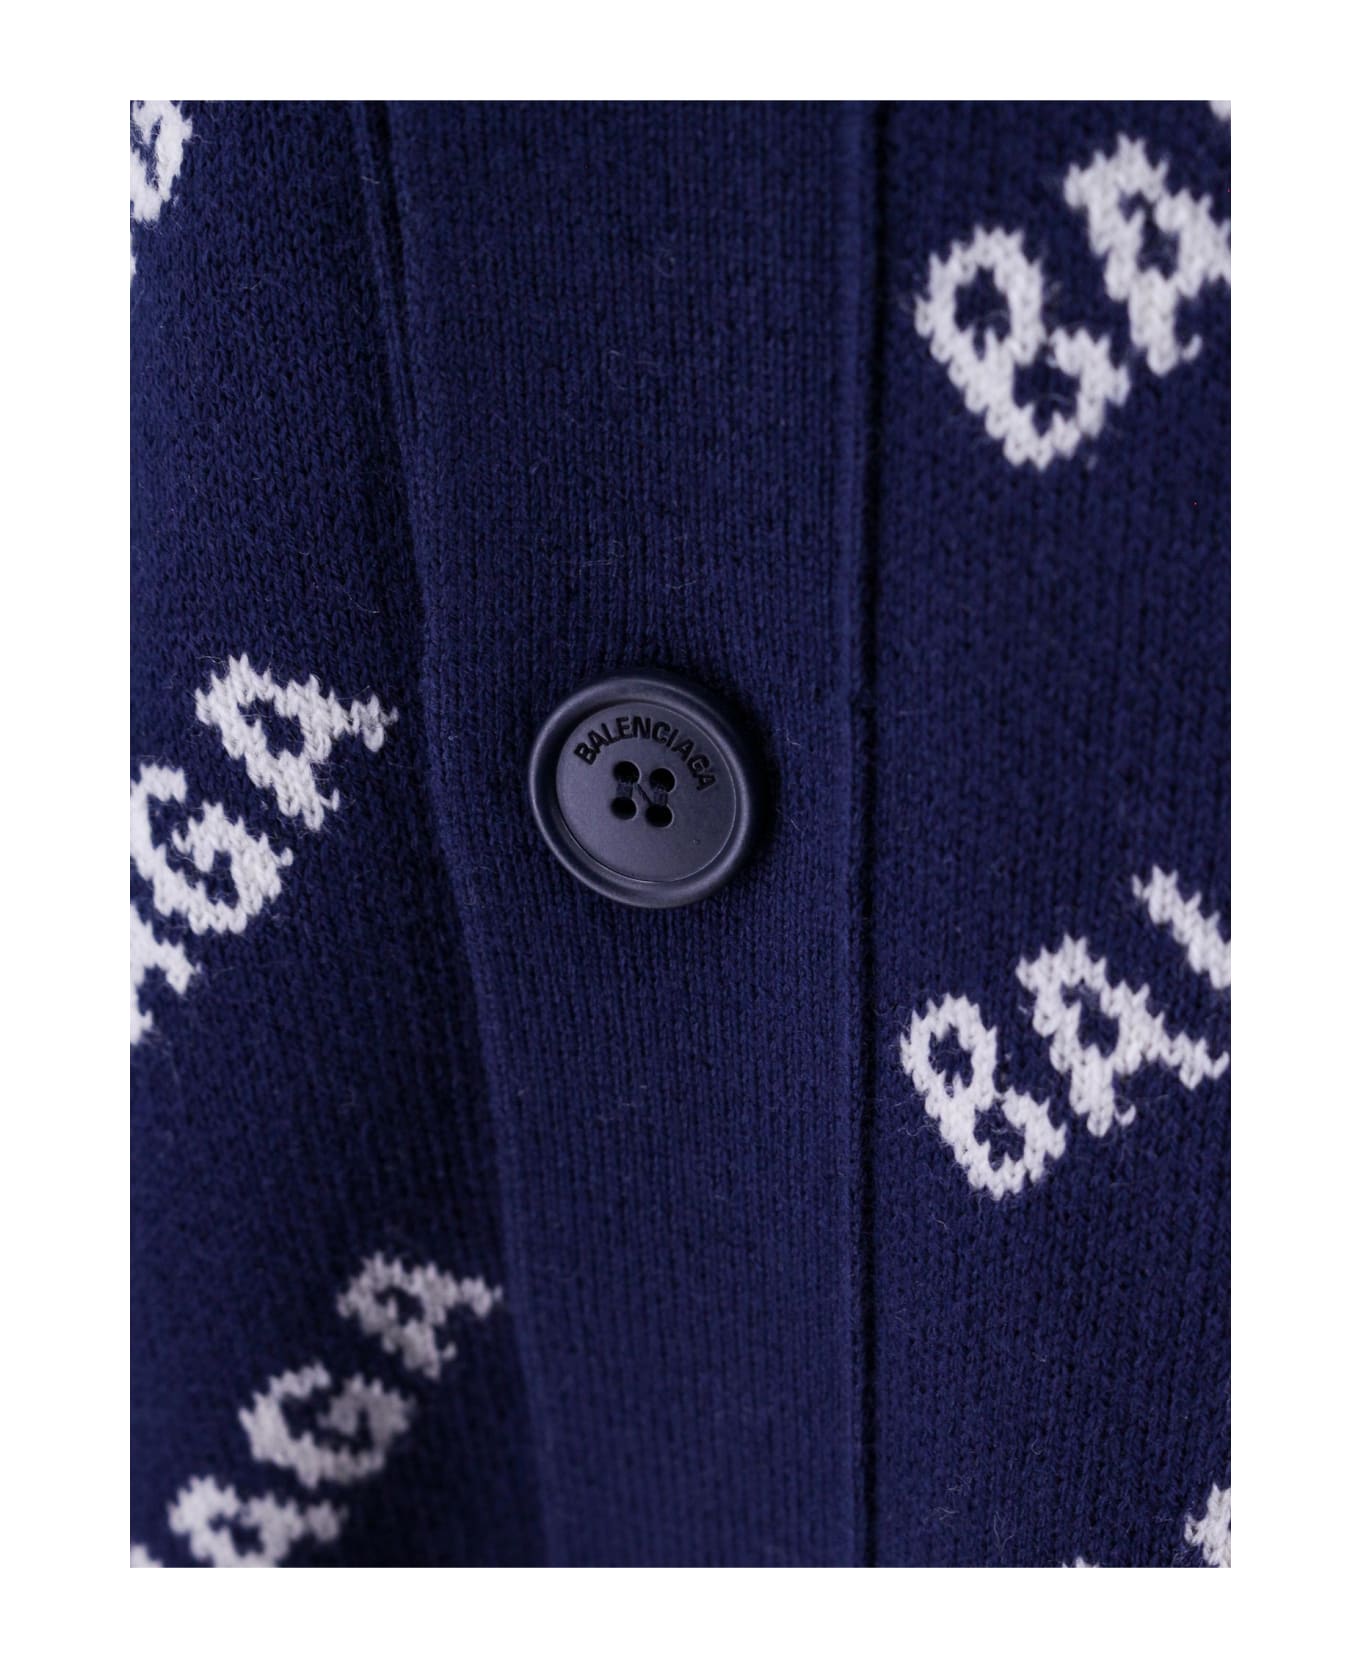 Balenciaga Embroidered Stretch Cotton Blend Oversize Cardigan - Blue